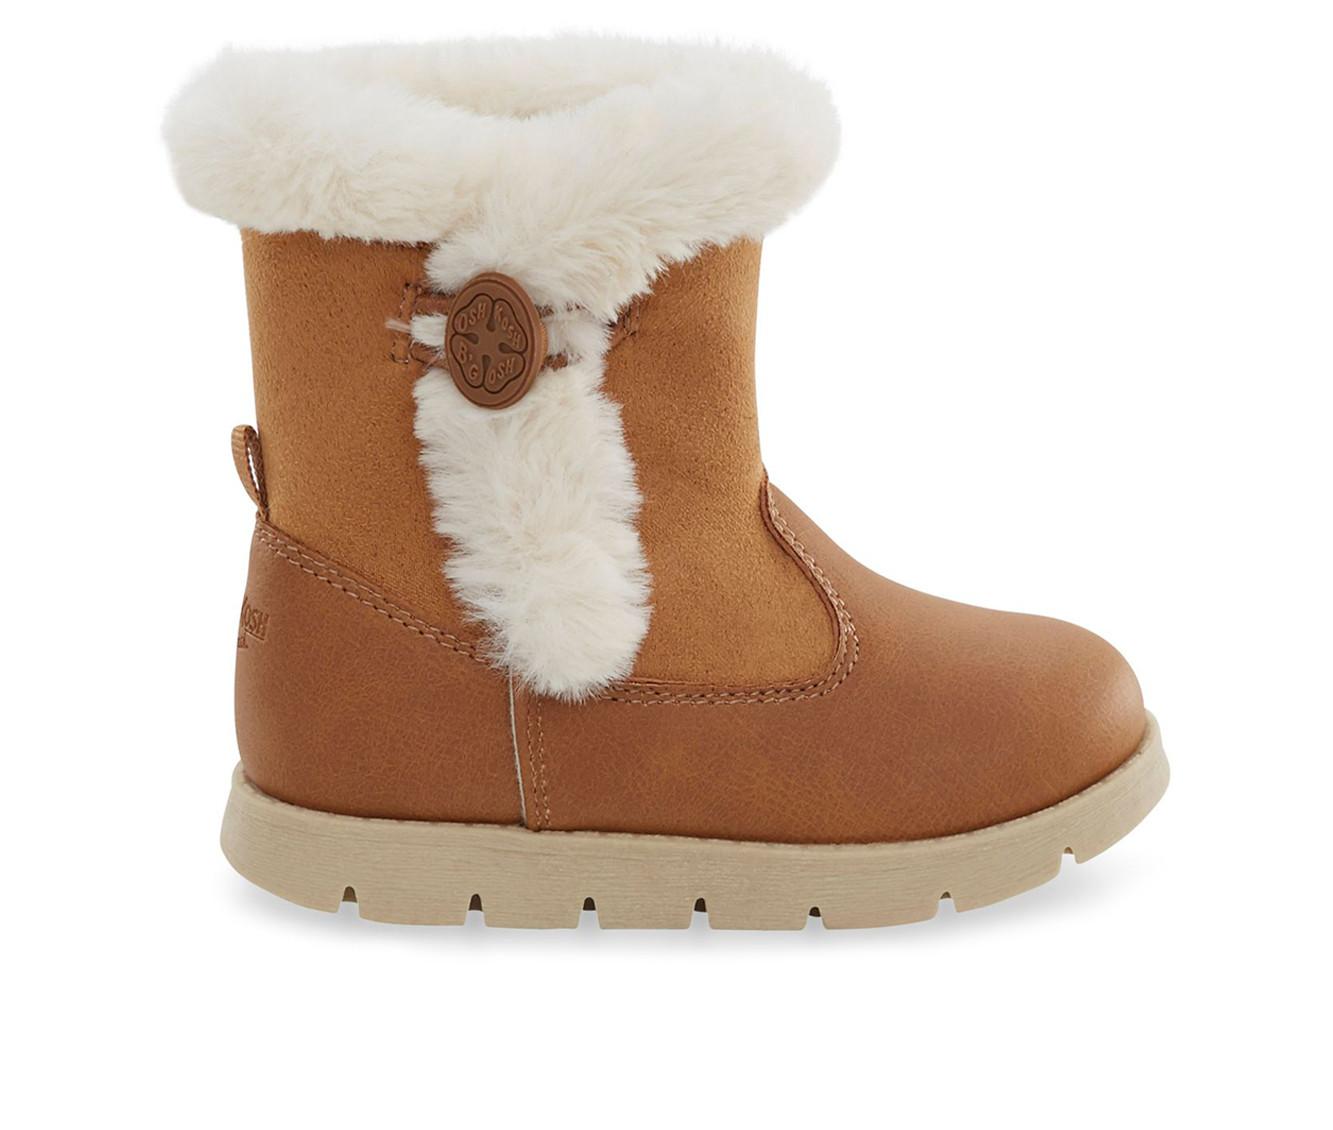 Girls' OshKosh B'gosh Toddler & Little Kid Siberian Winter Boots